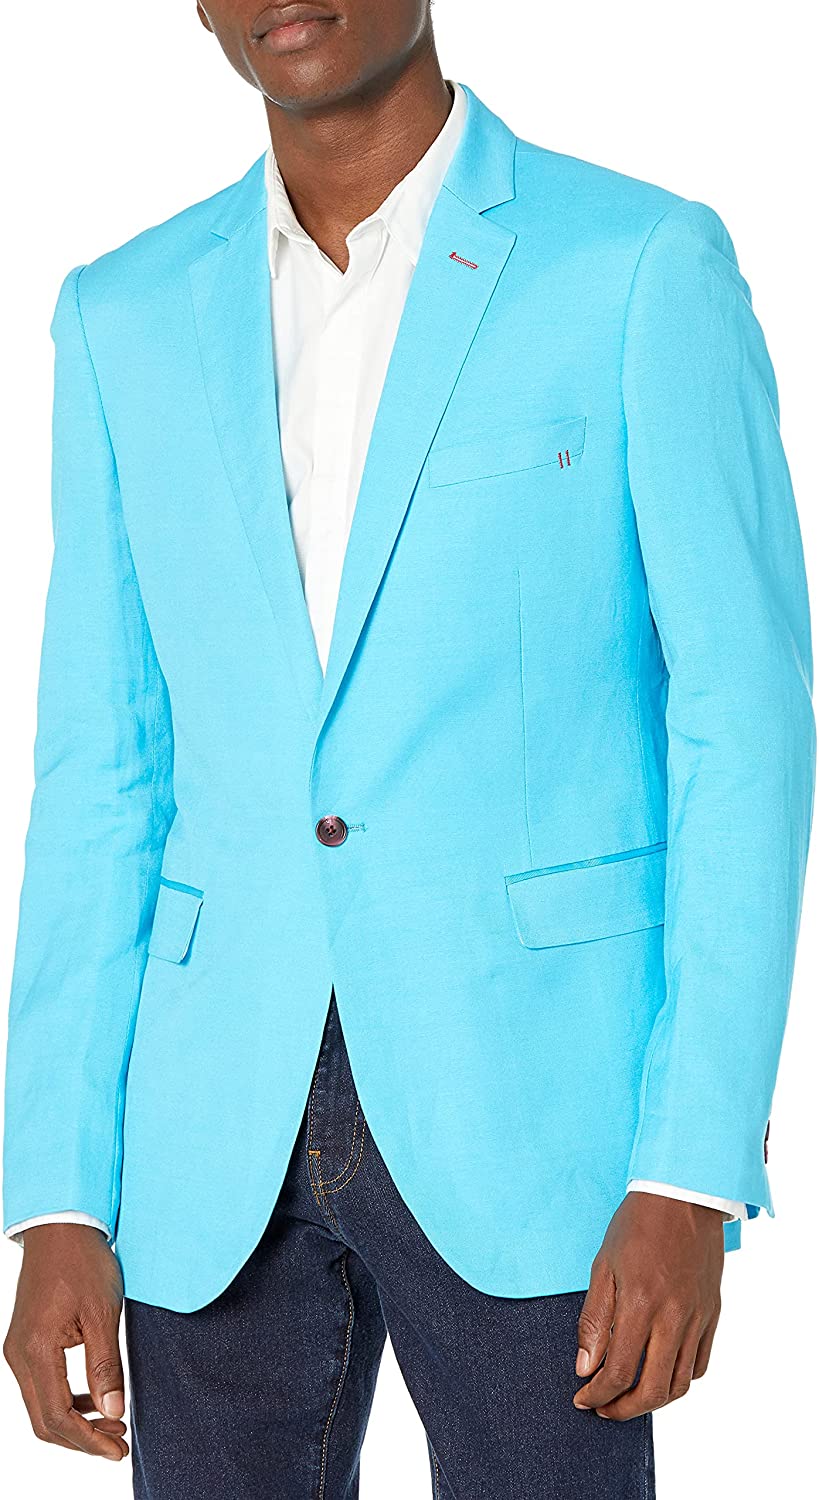 Azaro Uomo Men's Dress Party Prom Blazer Suit Jacket Casual Slim